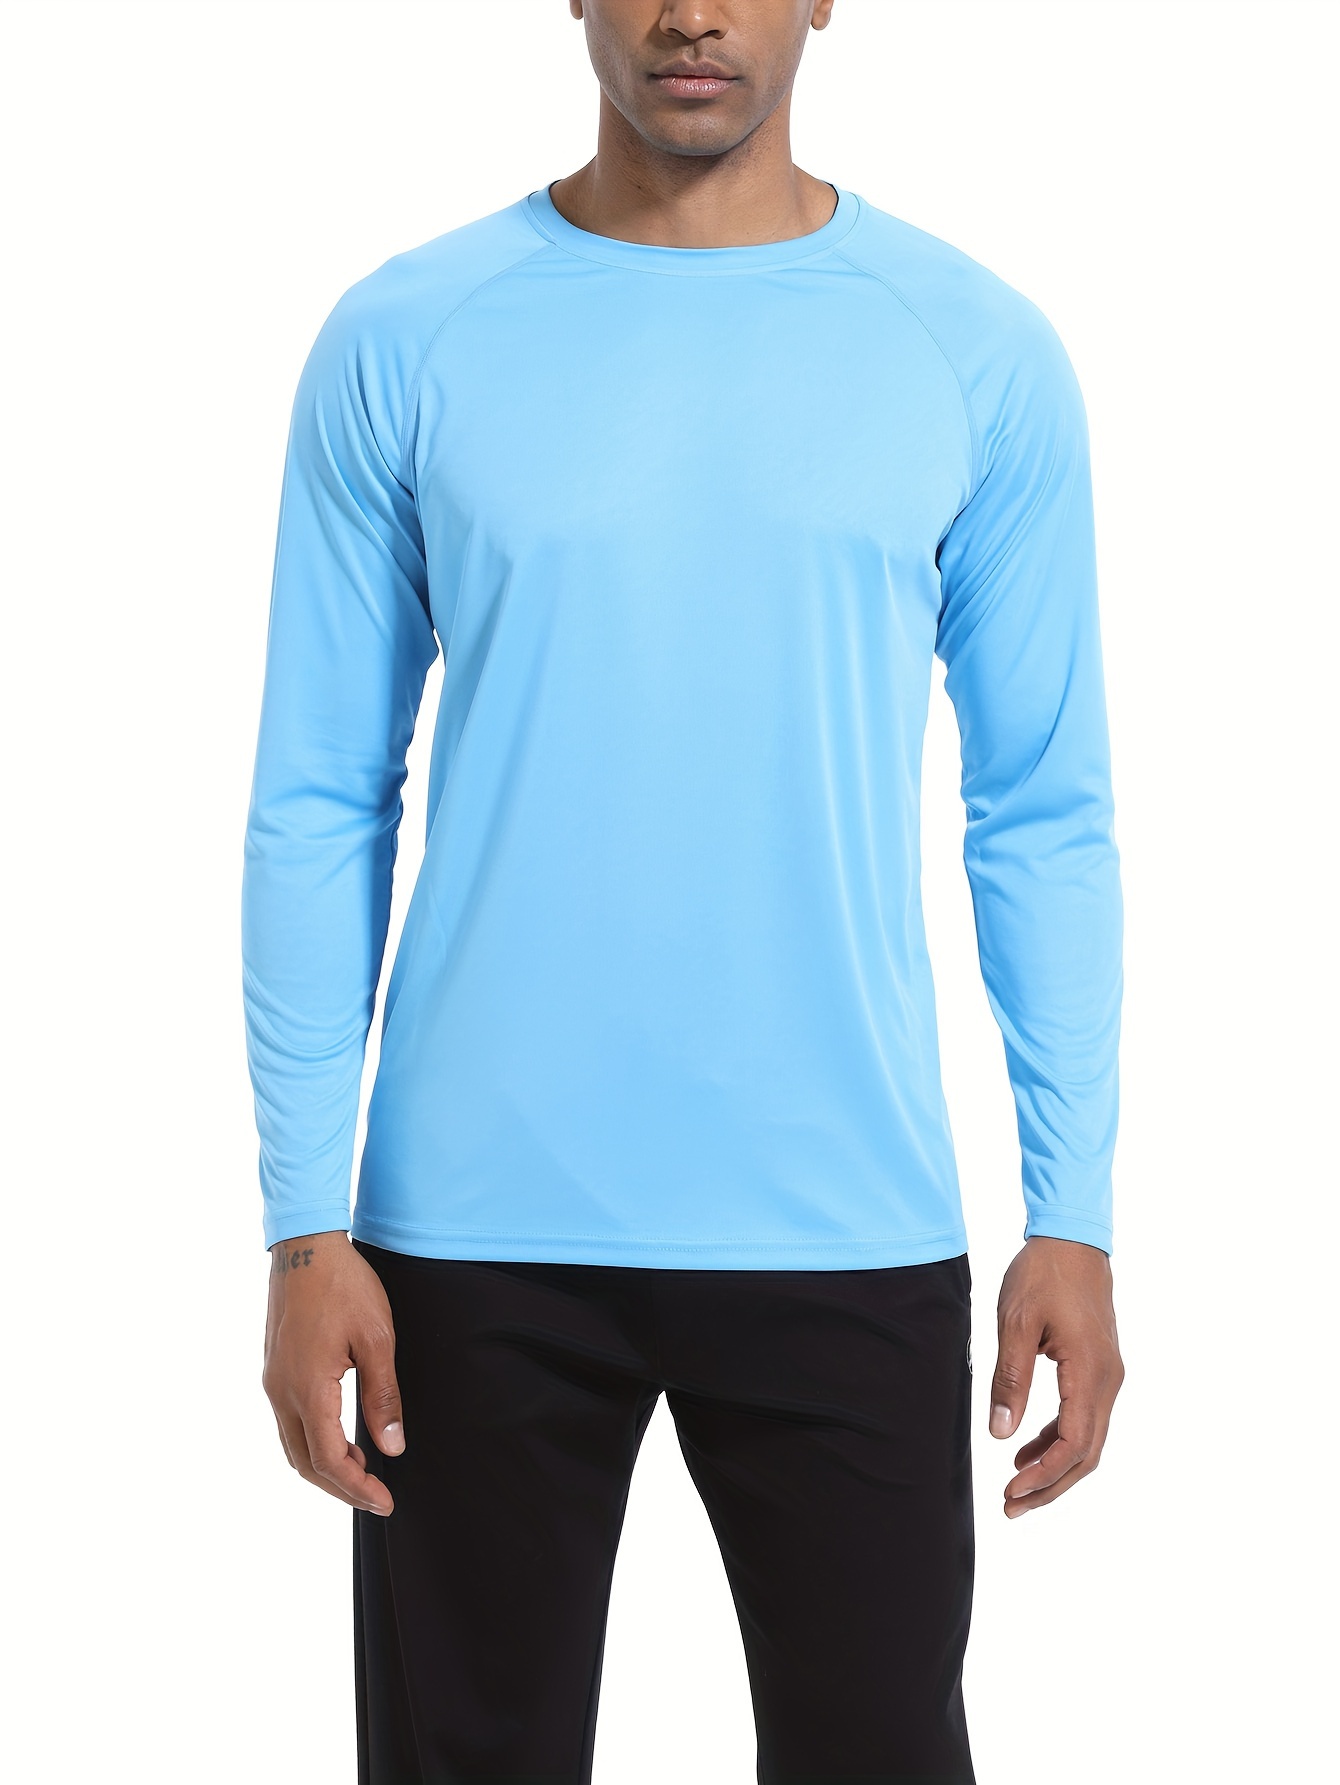 UPF 50+ Shirts for Men Long Sleeve Sun Protective Clothing UV Outdoor  Sportswear Beachwear Blue L 